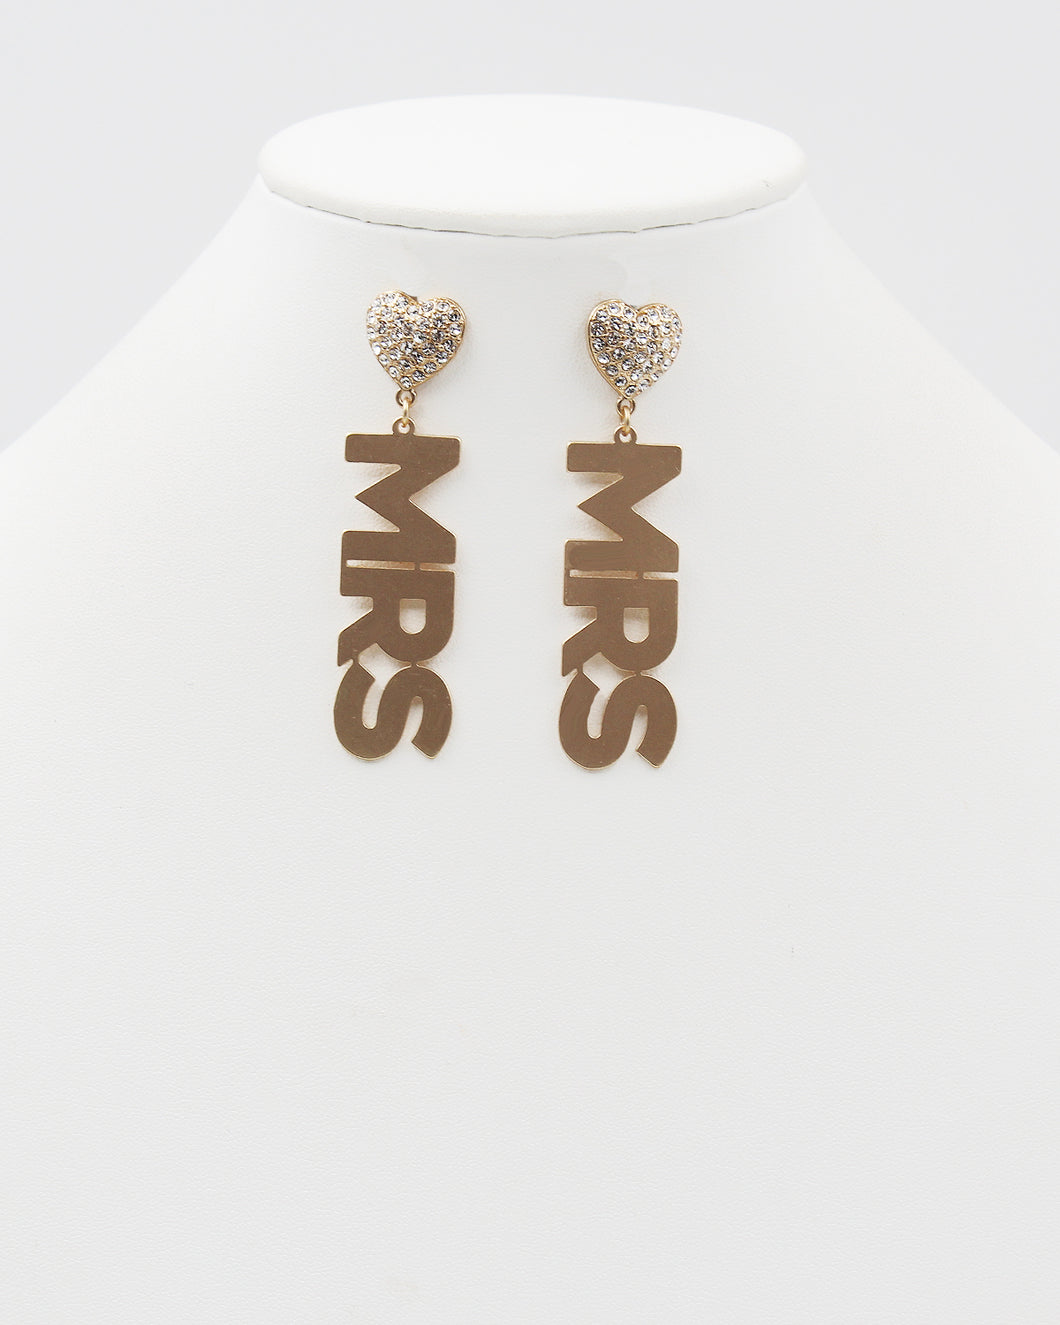 MRS Earrings with Rhinestone Heart Top